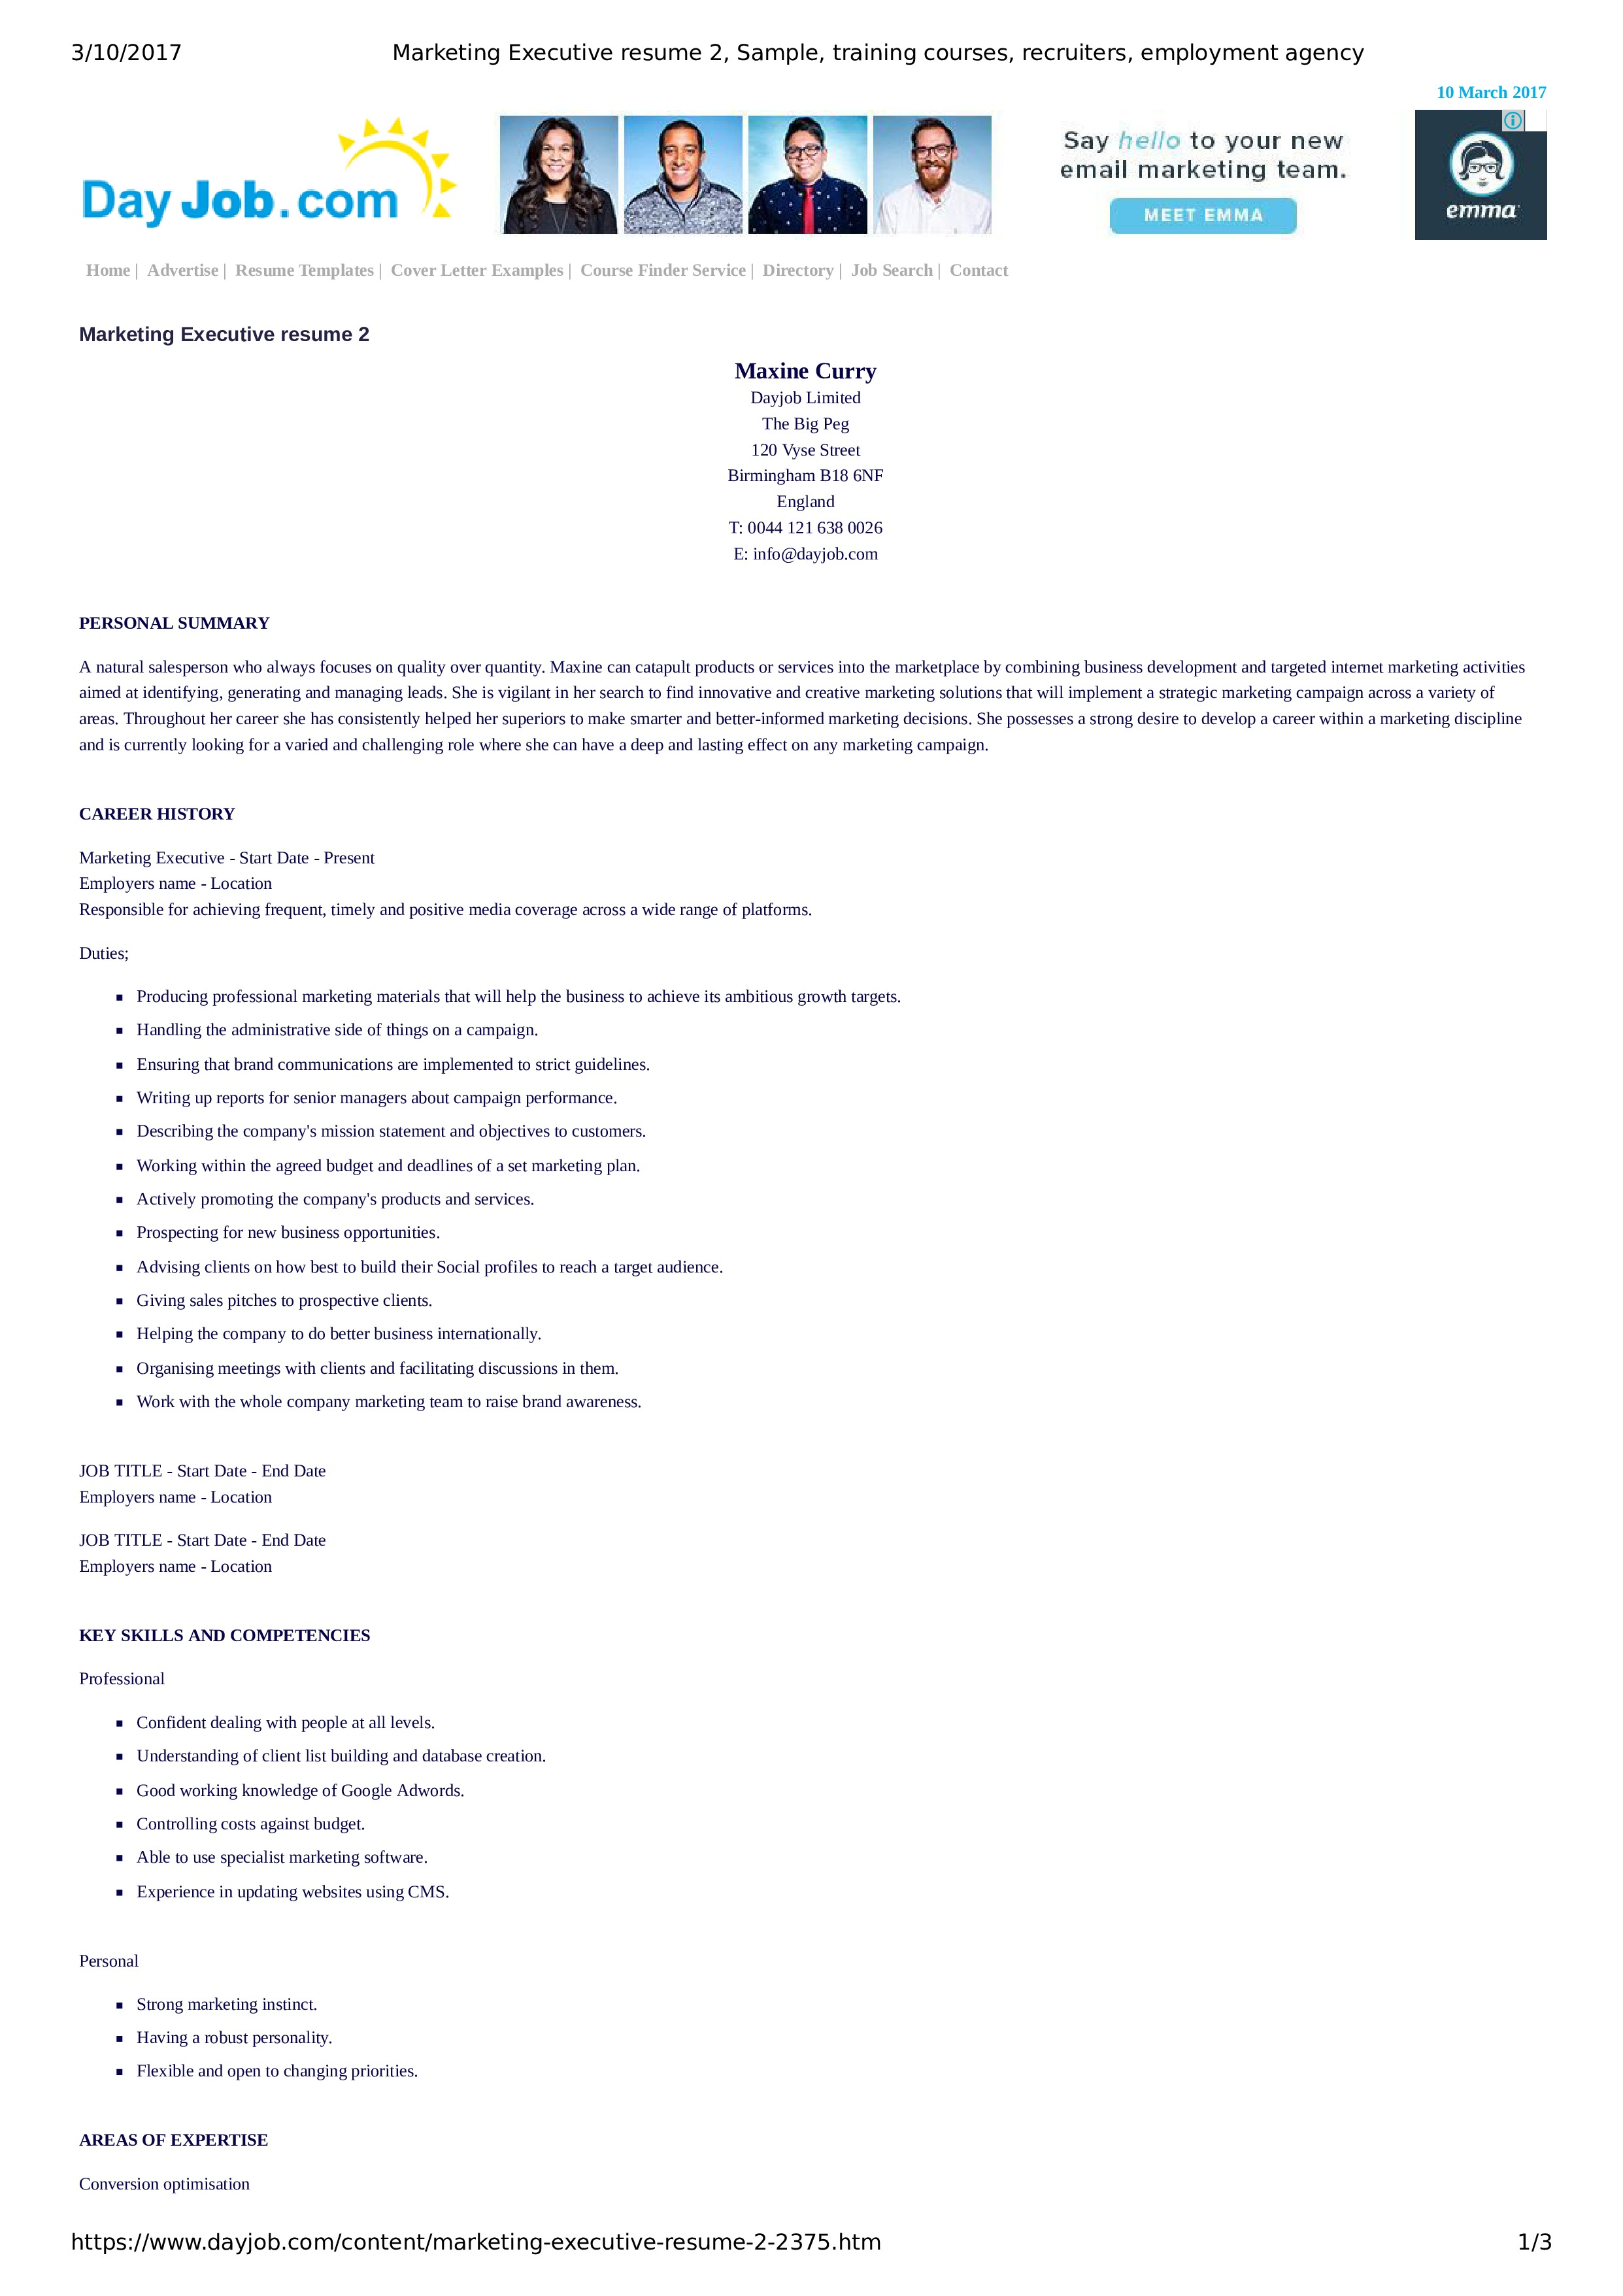 Marketing Executive Resume template main image